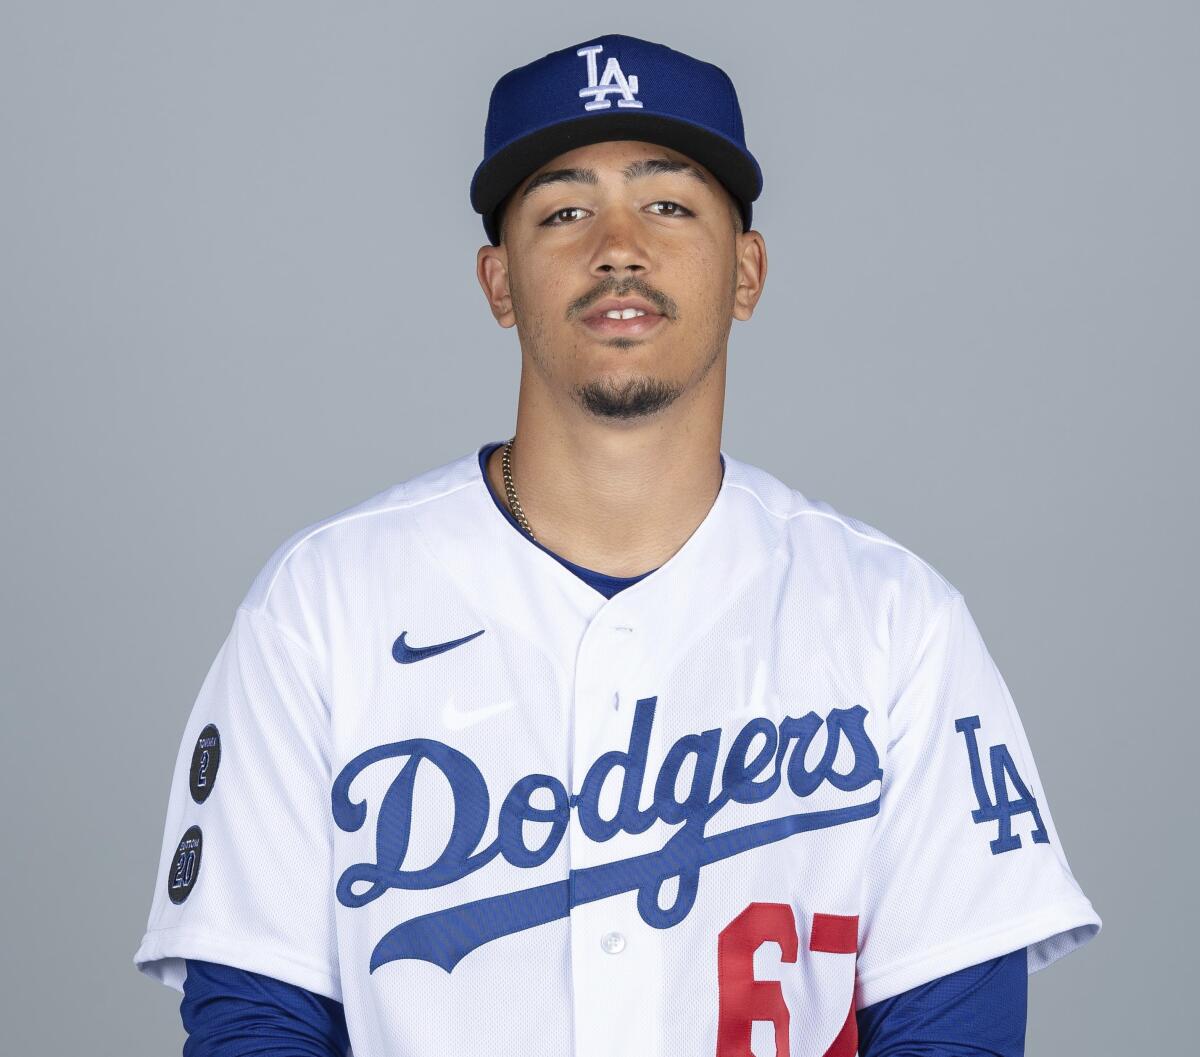 Dodgers minor league infielder Miguel Vargas.